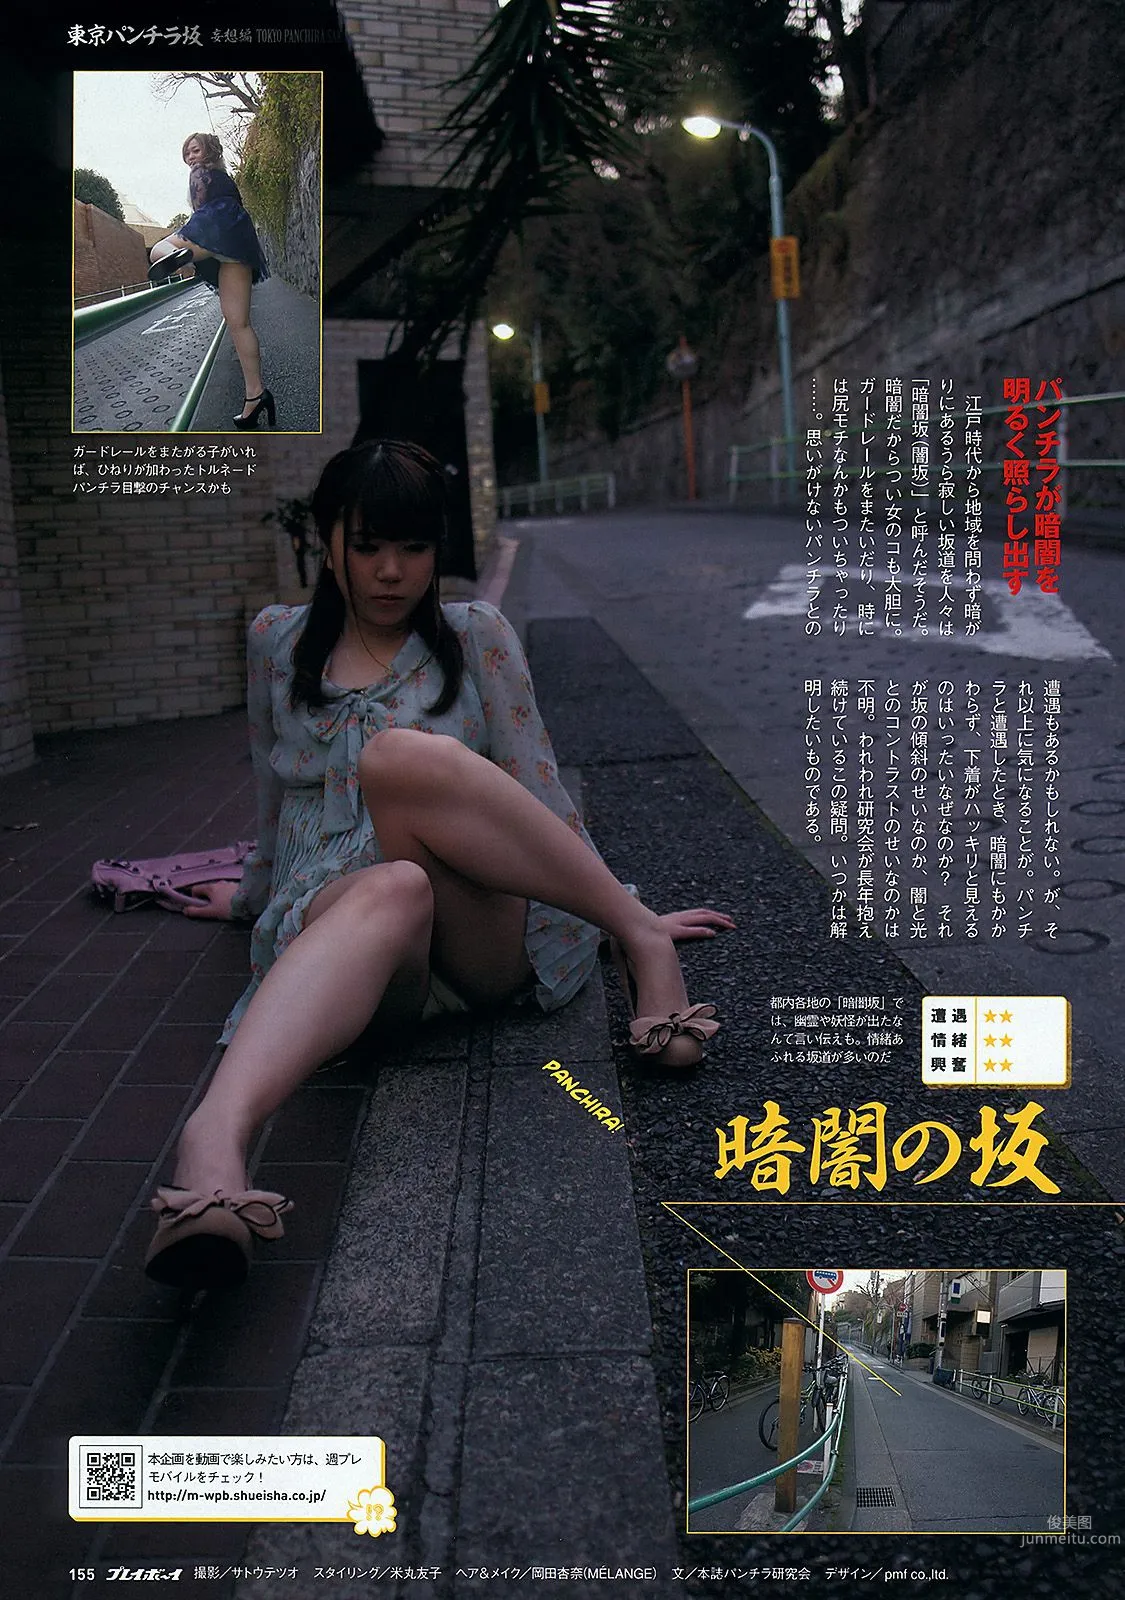 松井玲奈 木村文乃 西田あい 9nine 池田夏希 [Weekly Playboy] 2012年No.06 写真杂志39